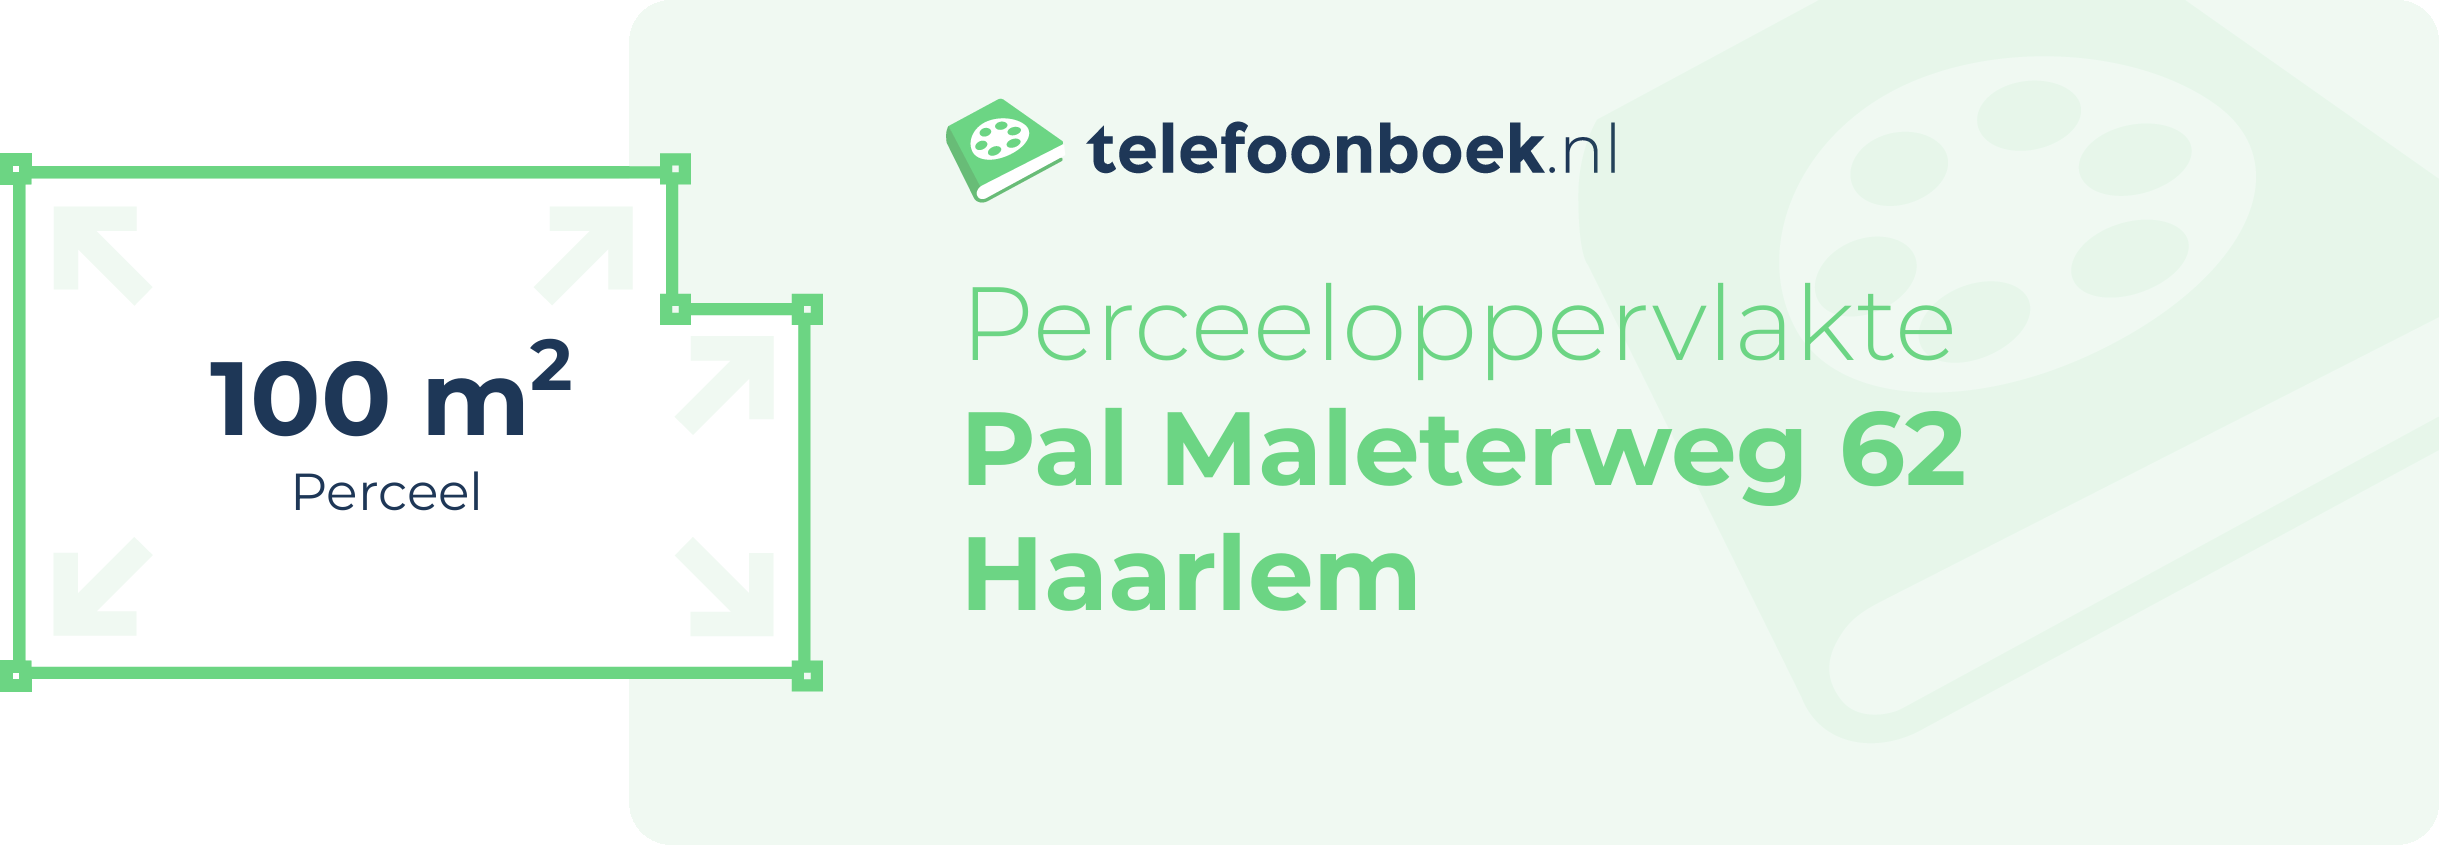 Perceeloppervlakte Pal Maleterweg 62 Haarlem